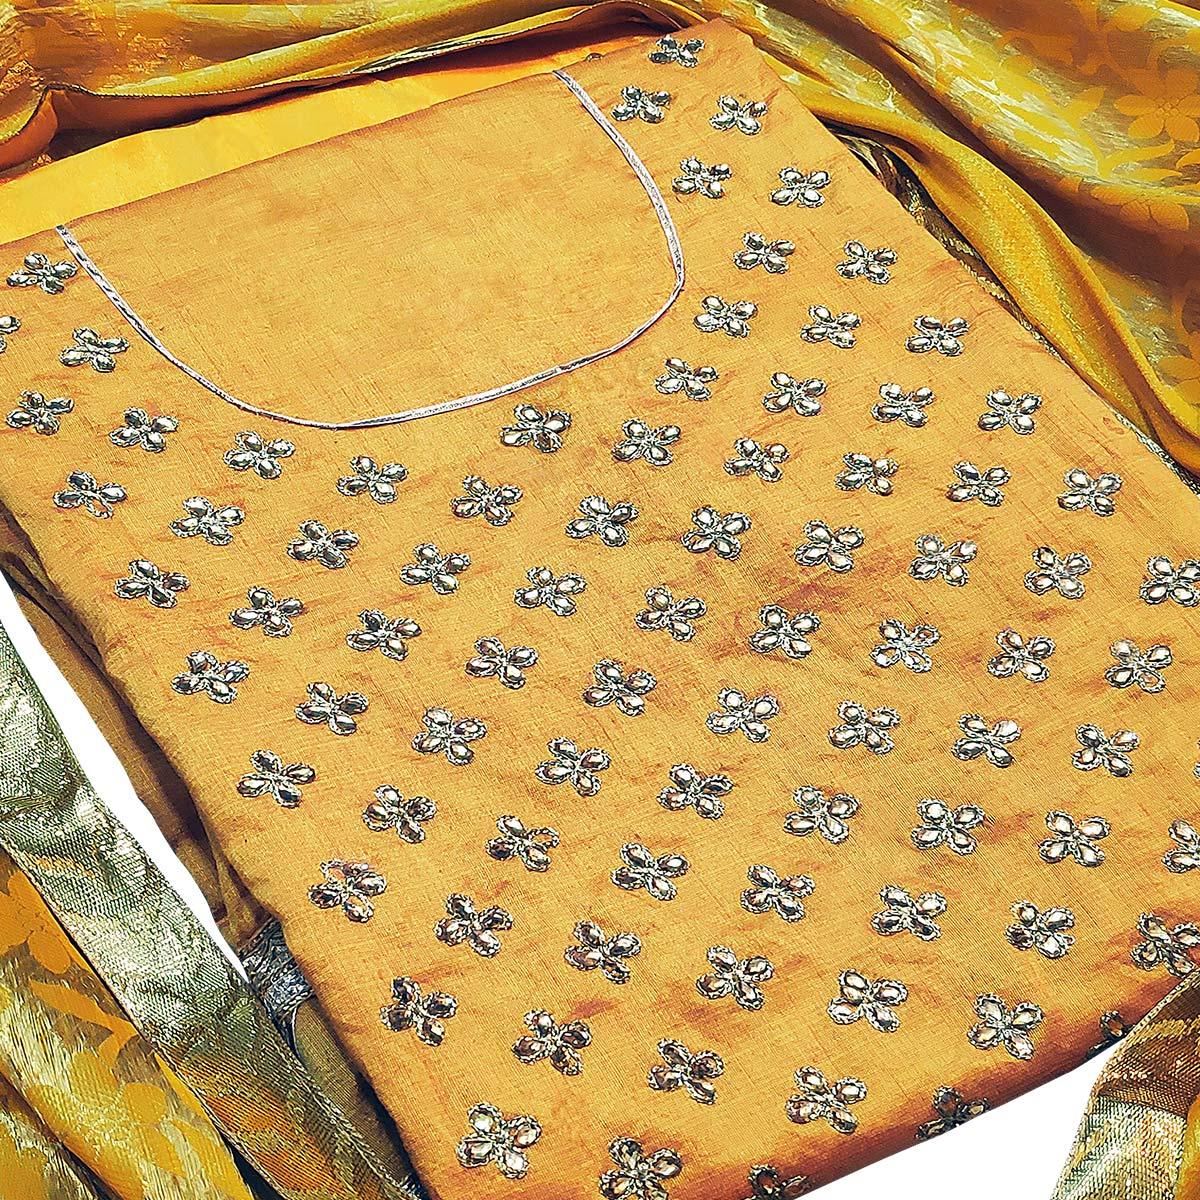 Adorning Yellow Colored Casual Wear Embroidered Silk Dress Material With Banarasi Silk Dupatta - Peachmode